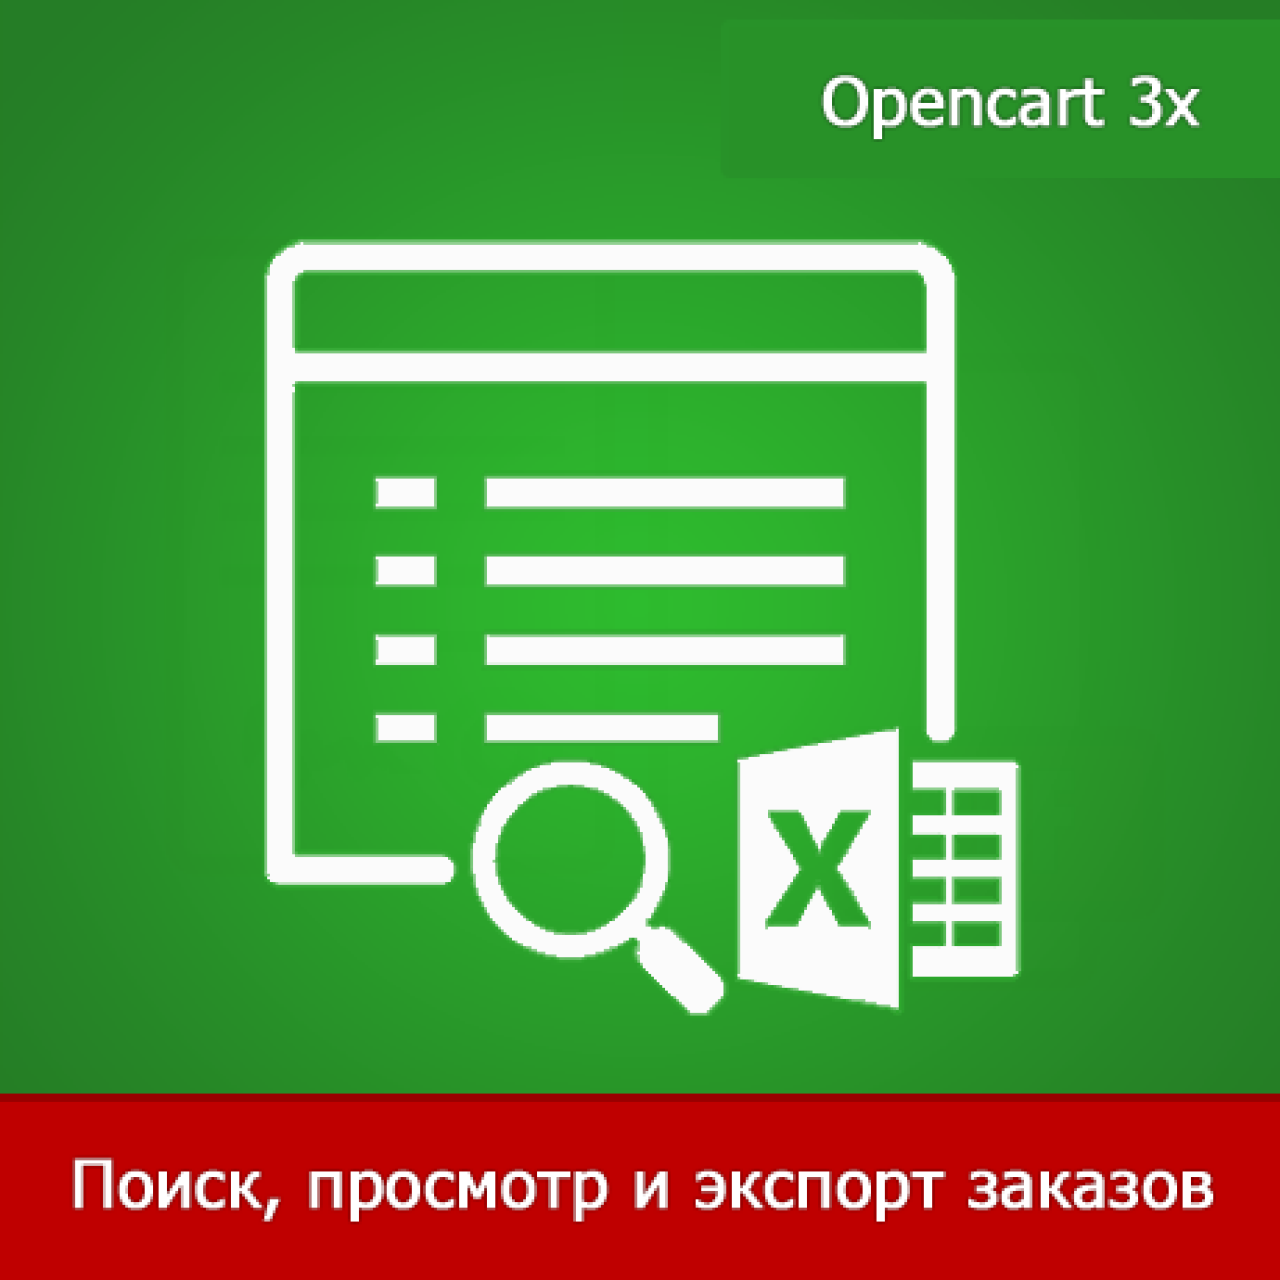 SearchOrder 3x - просмотр, поиск и экспорт заказов для Opencart 3x из категории Заказ, корзина для CMS OpenCart (ОпенКарт)